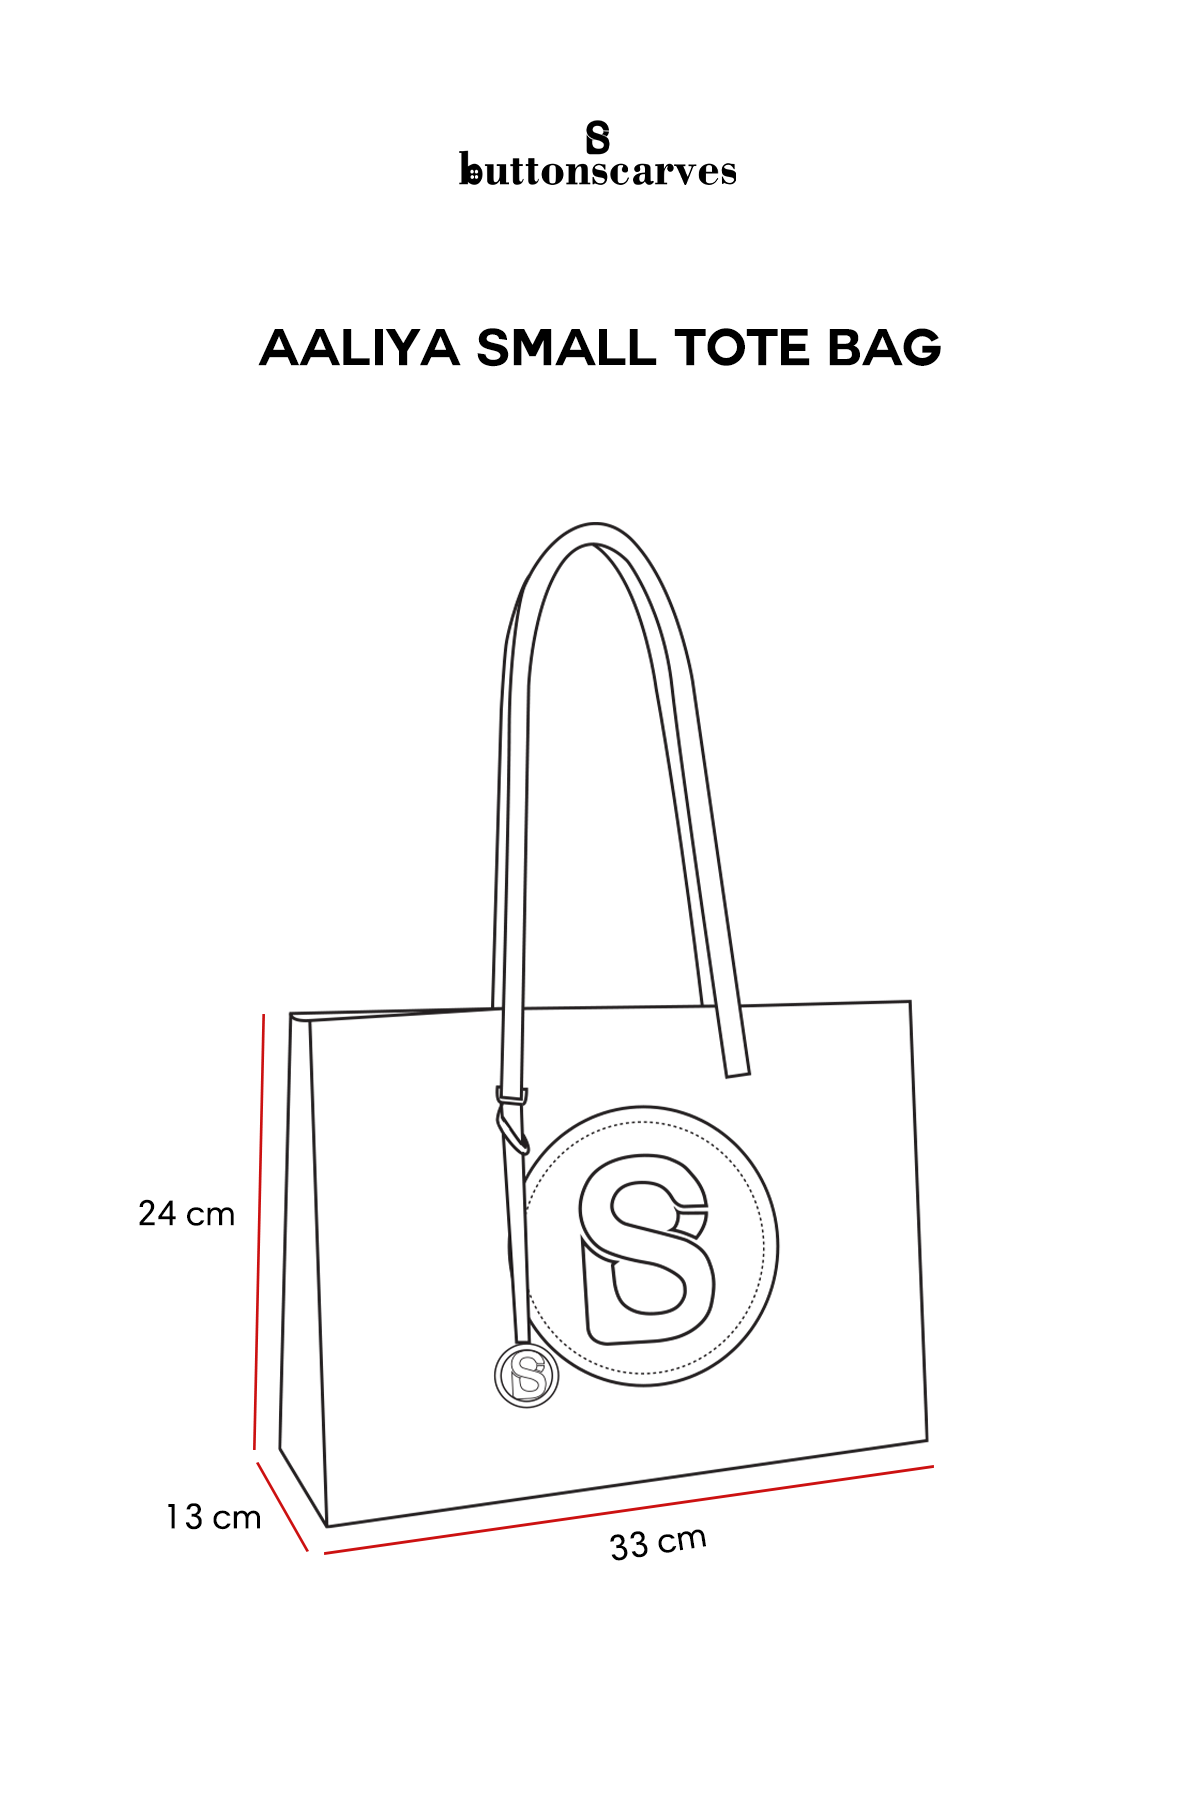 Aaliya Small Tote Bag - Cherry